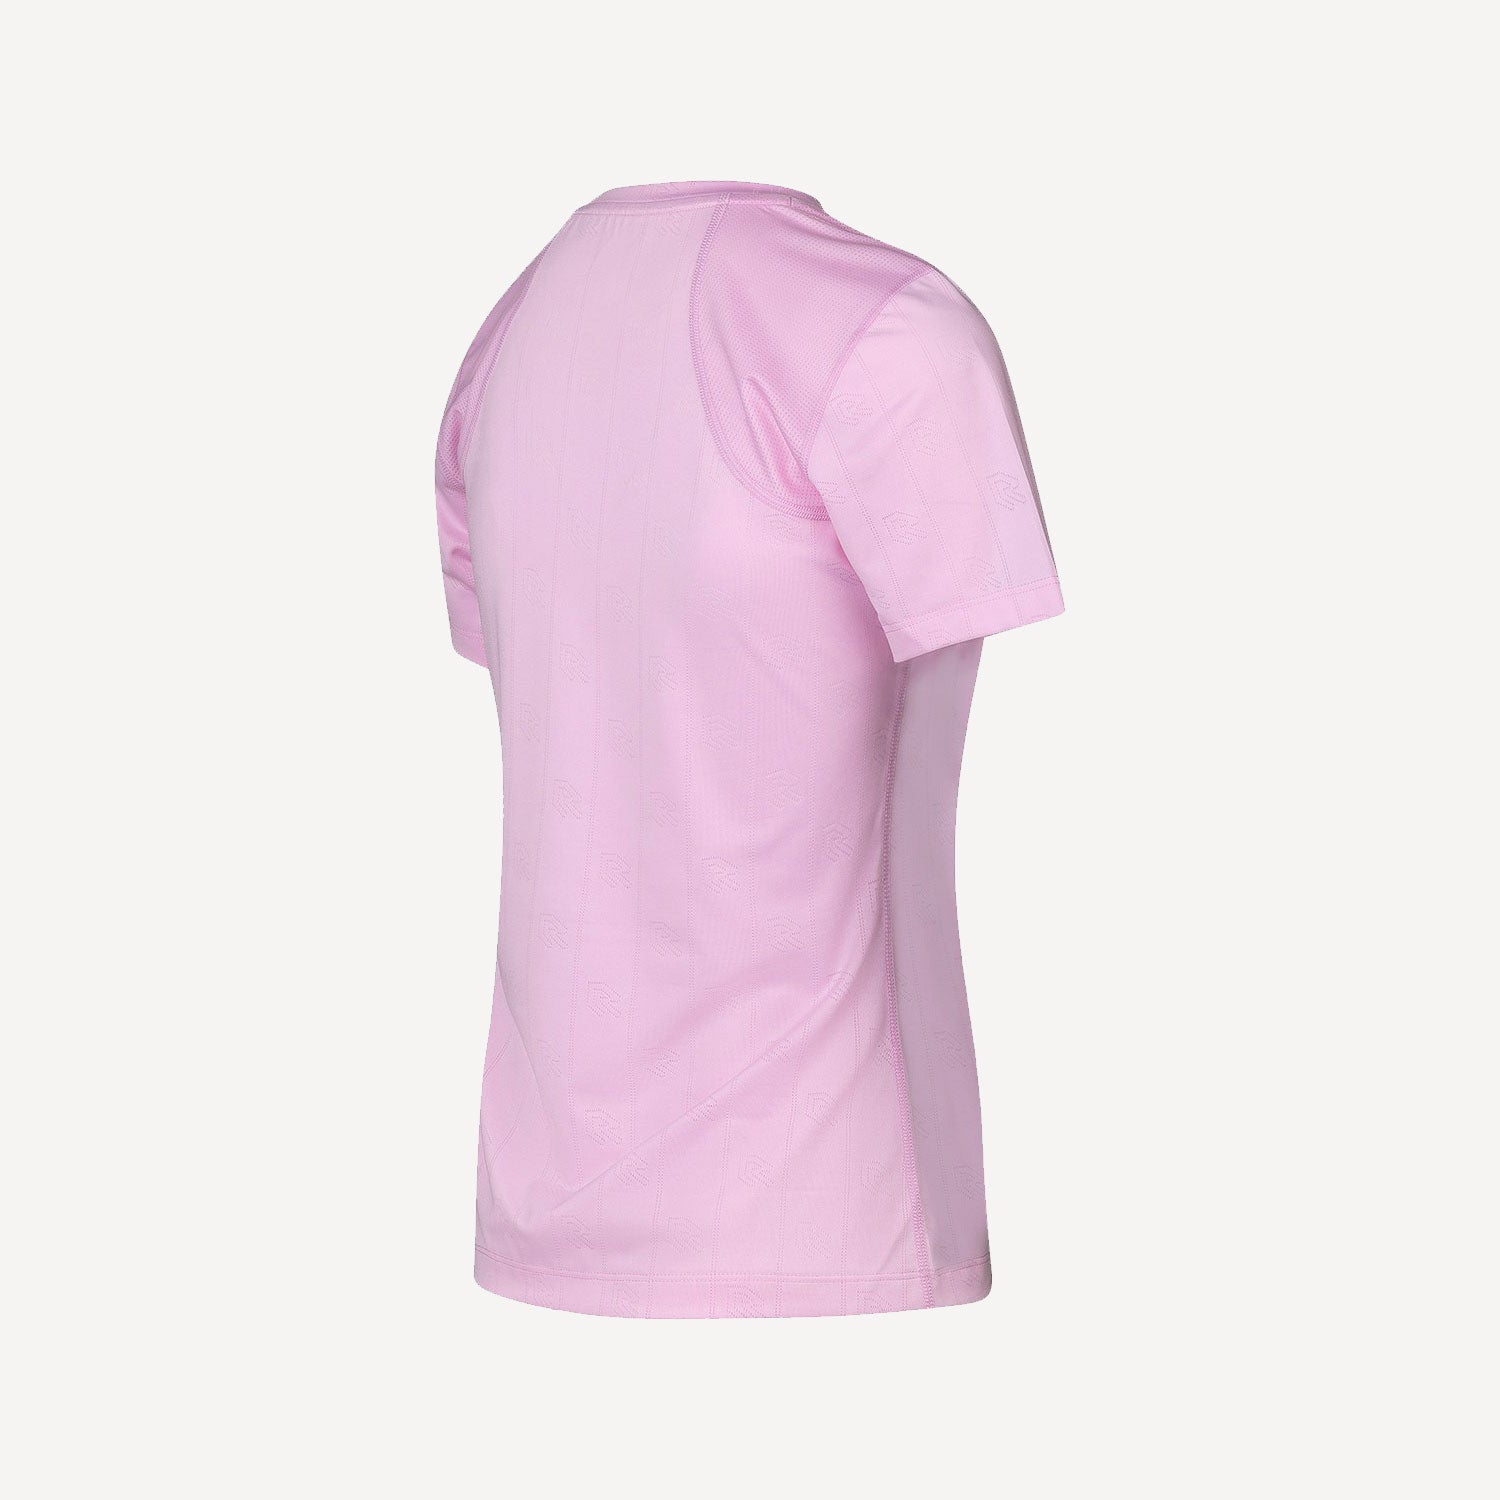 Robey Ace Women's Tennis Shirt - Pink (2)